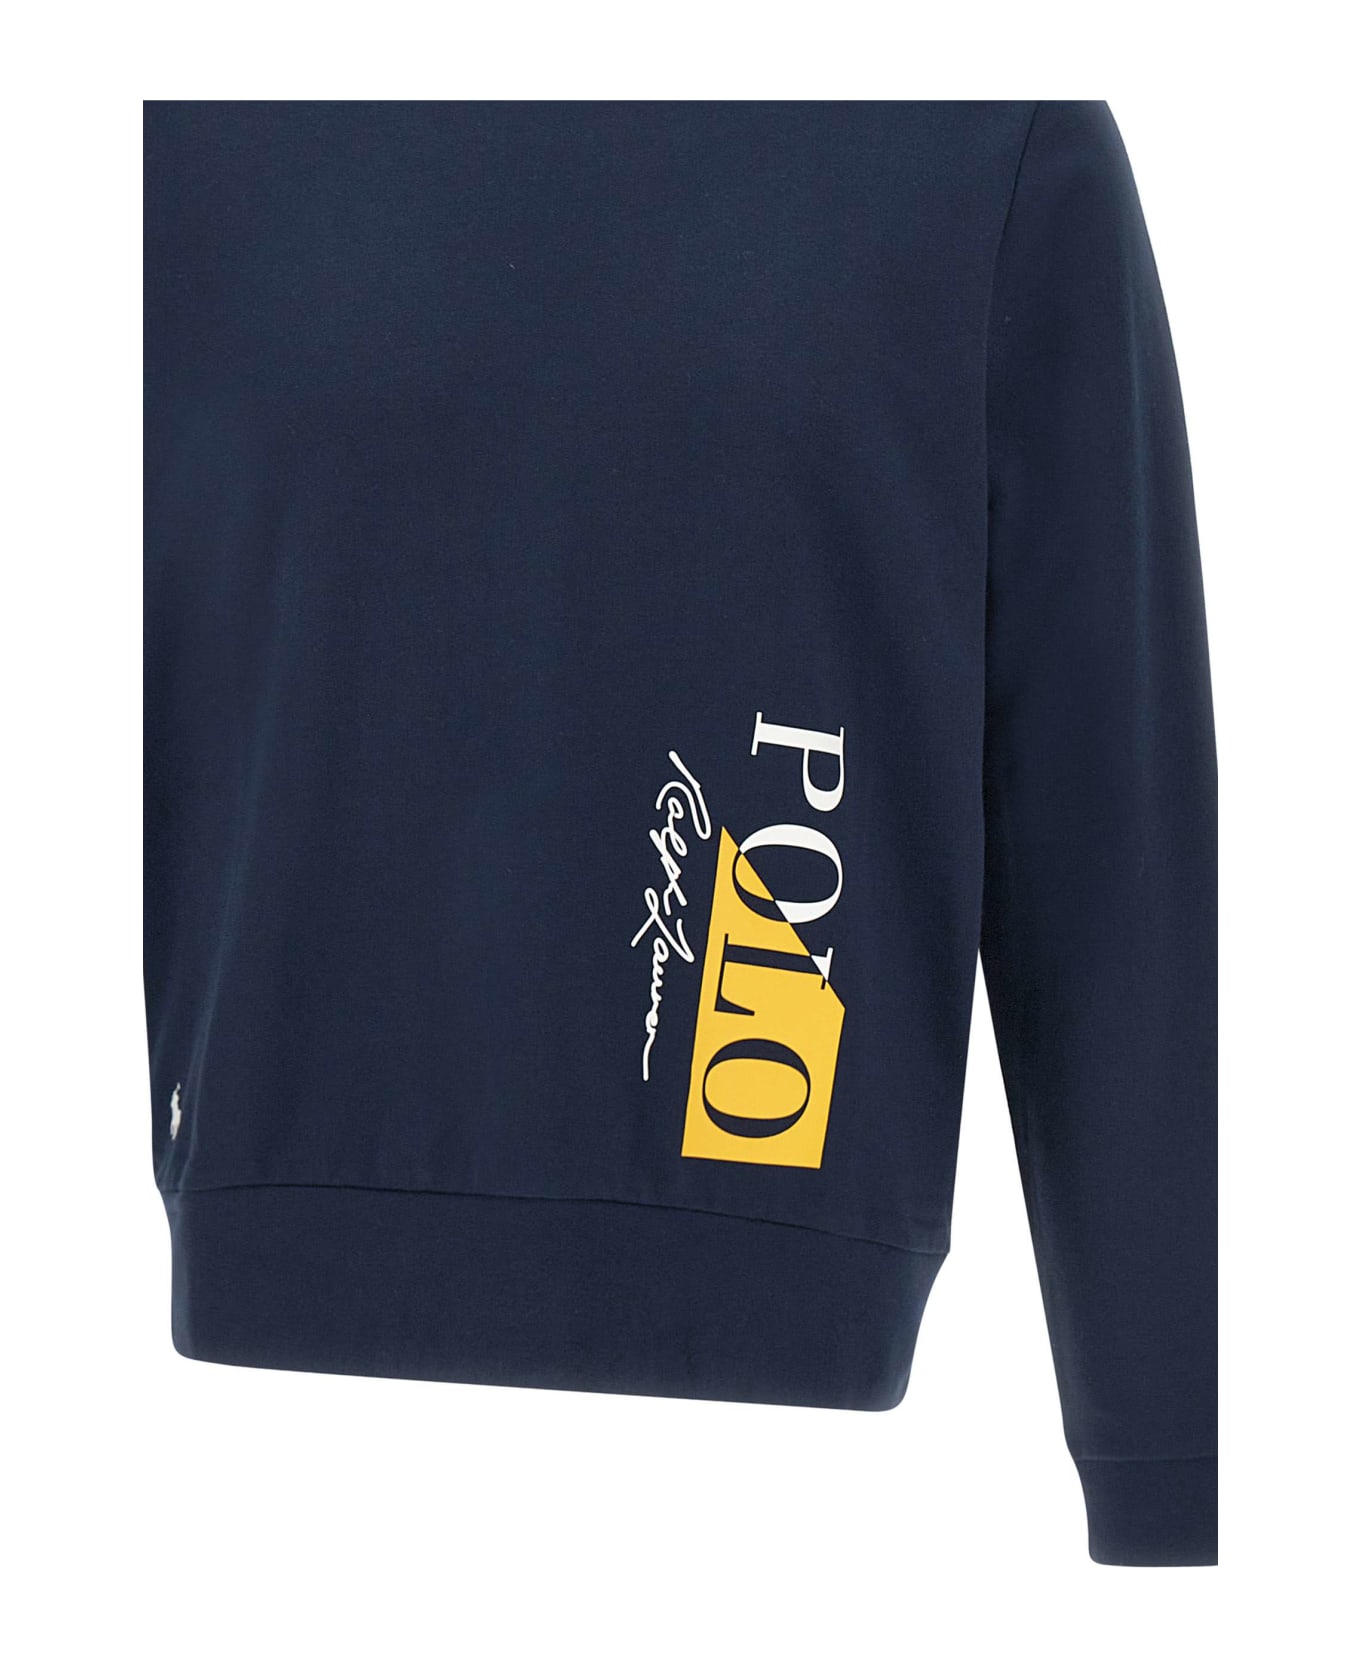 Polo Ralph Lauren Cotton Sweater - BLUE